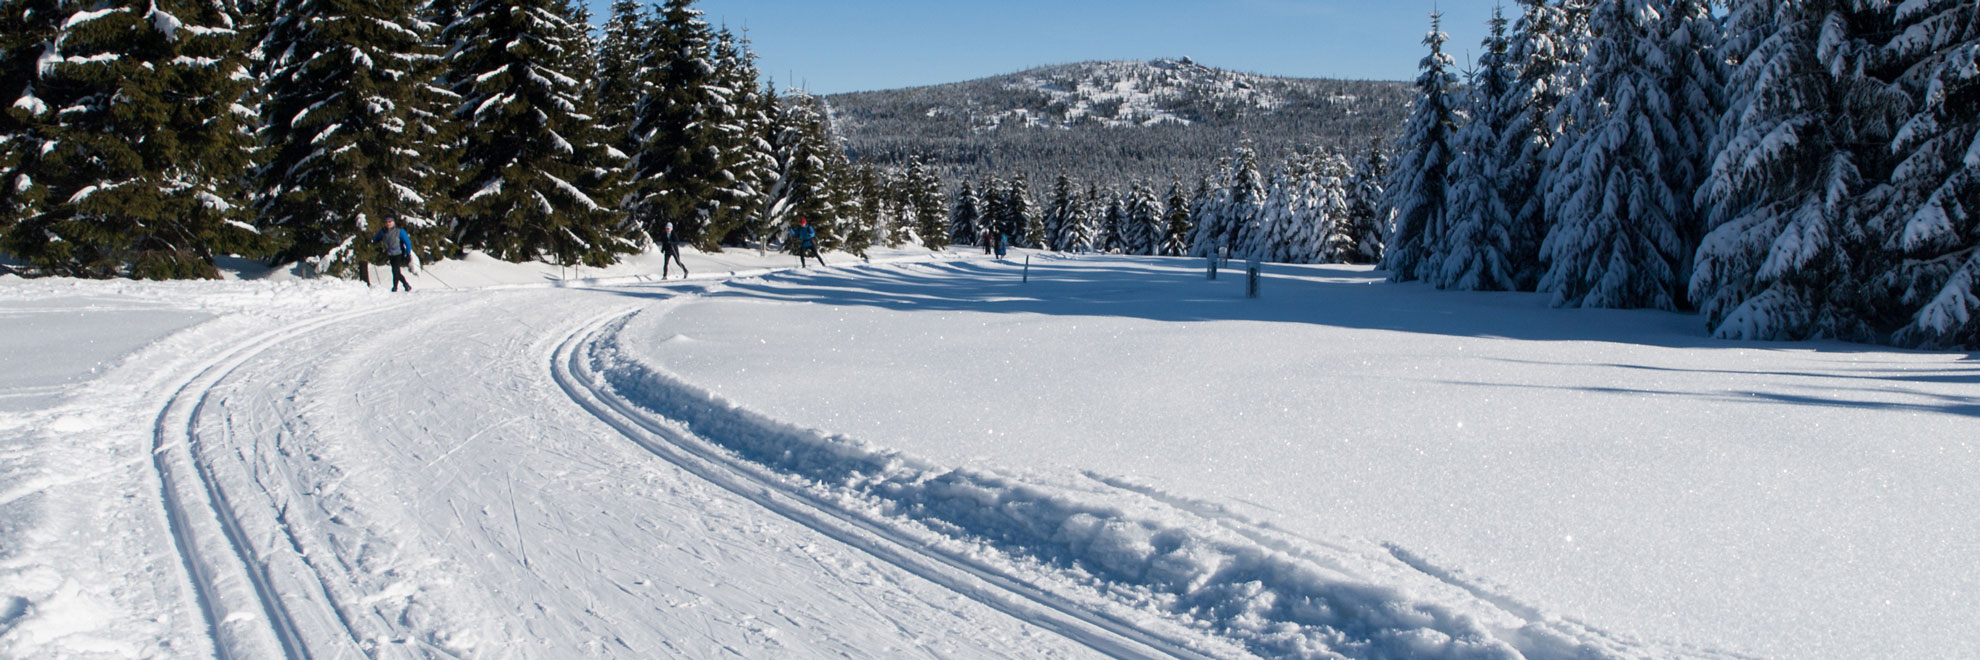 Skiing trail